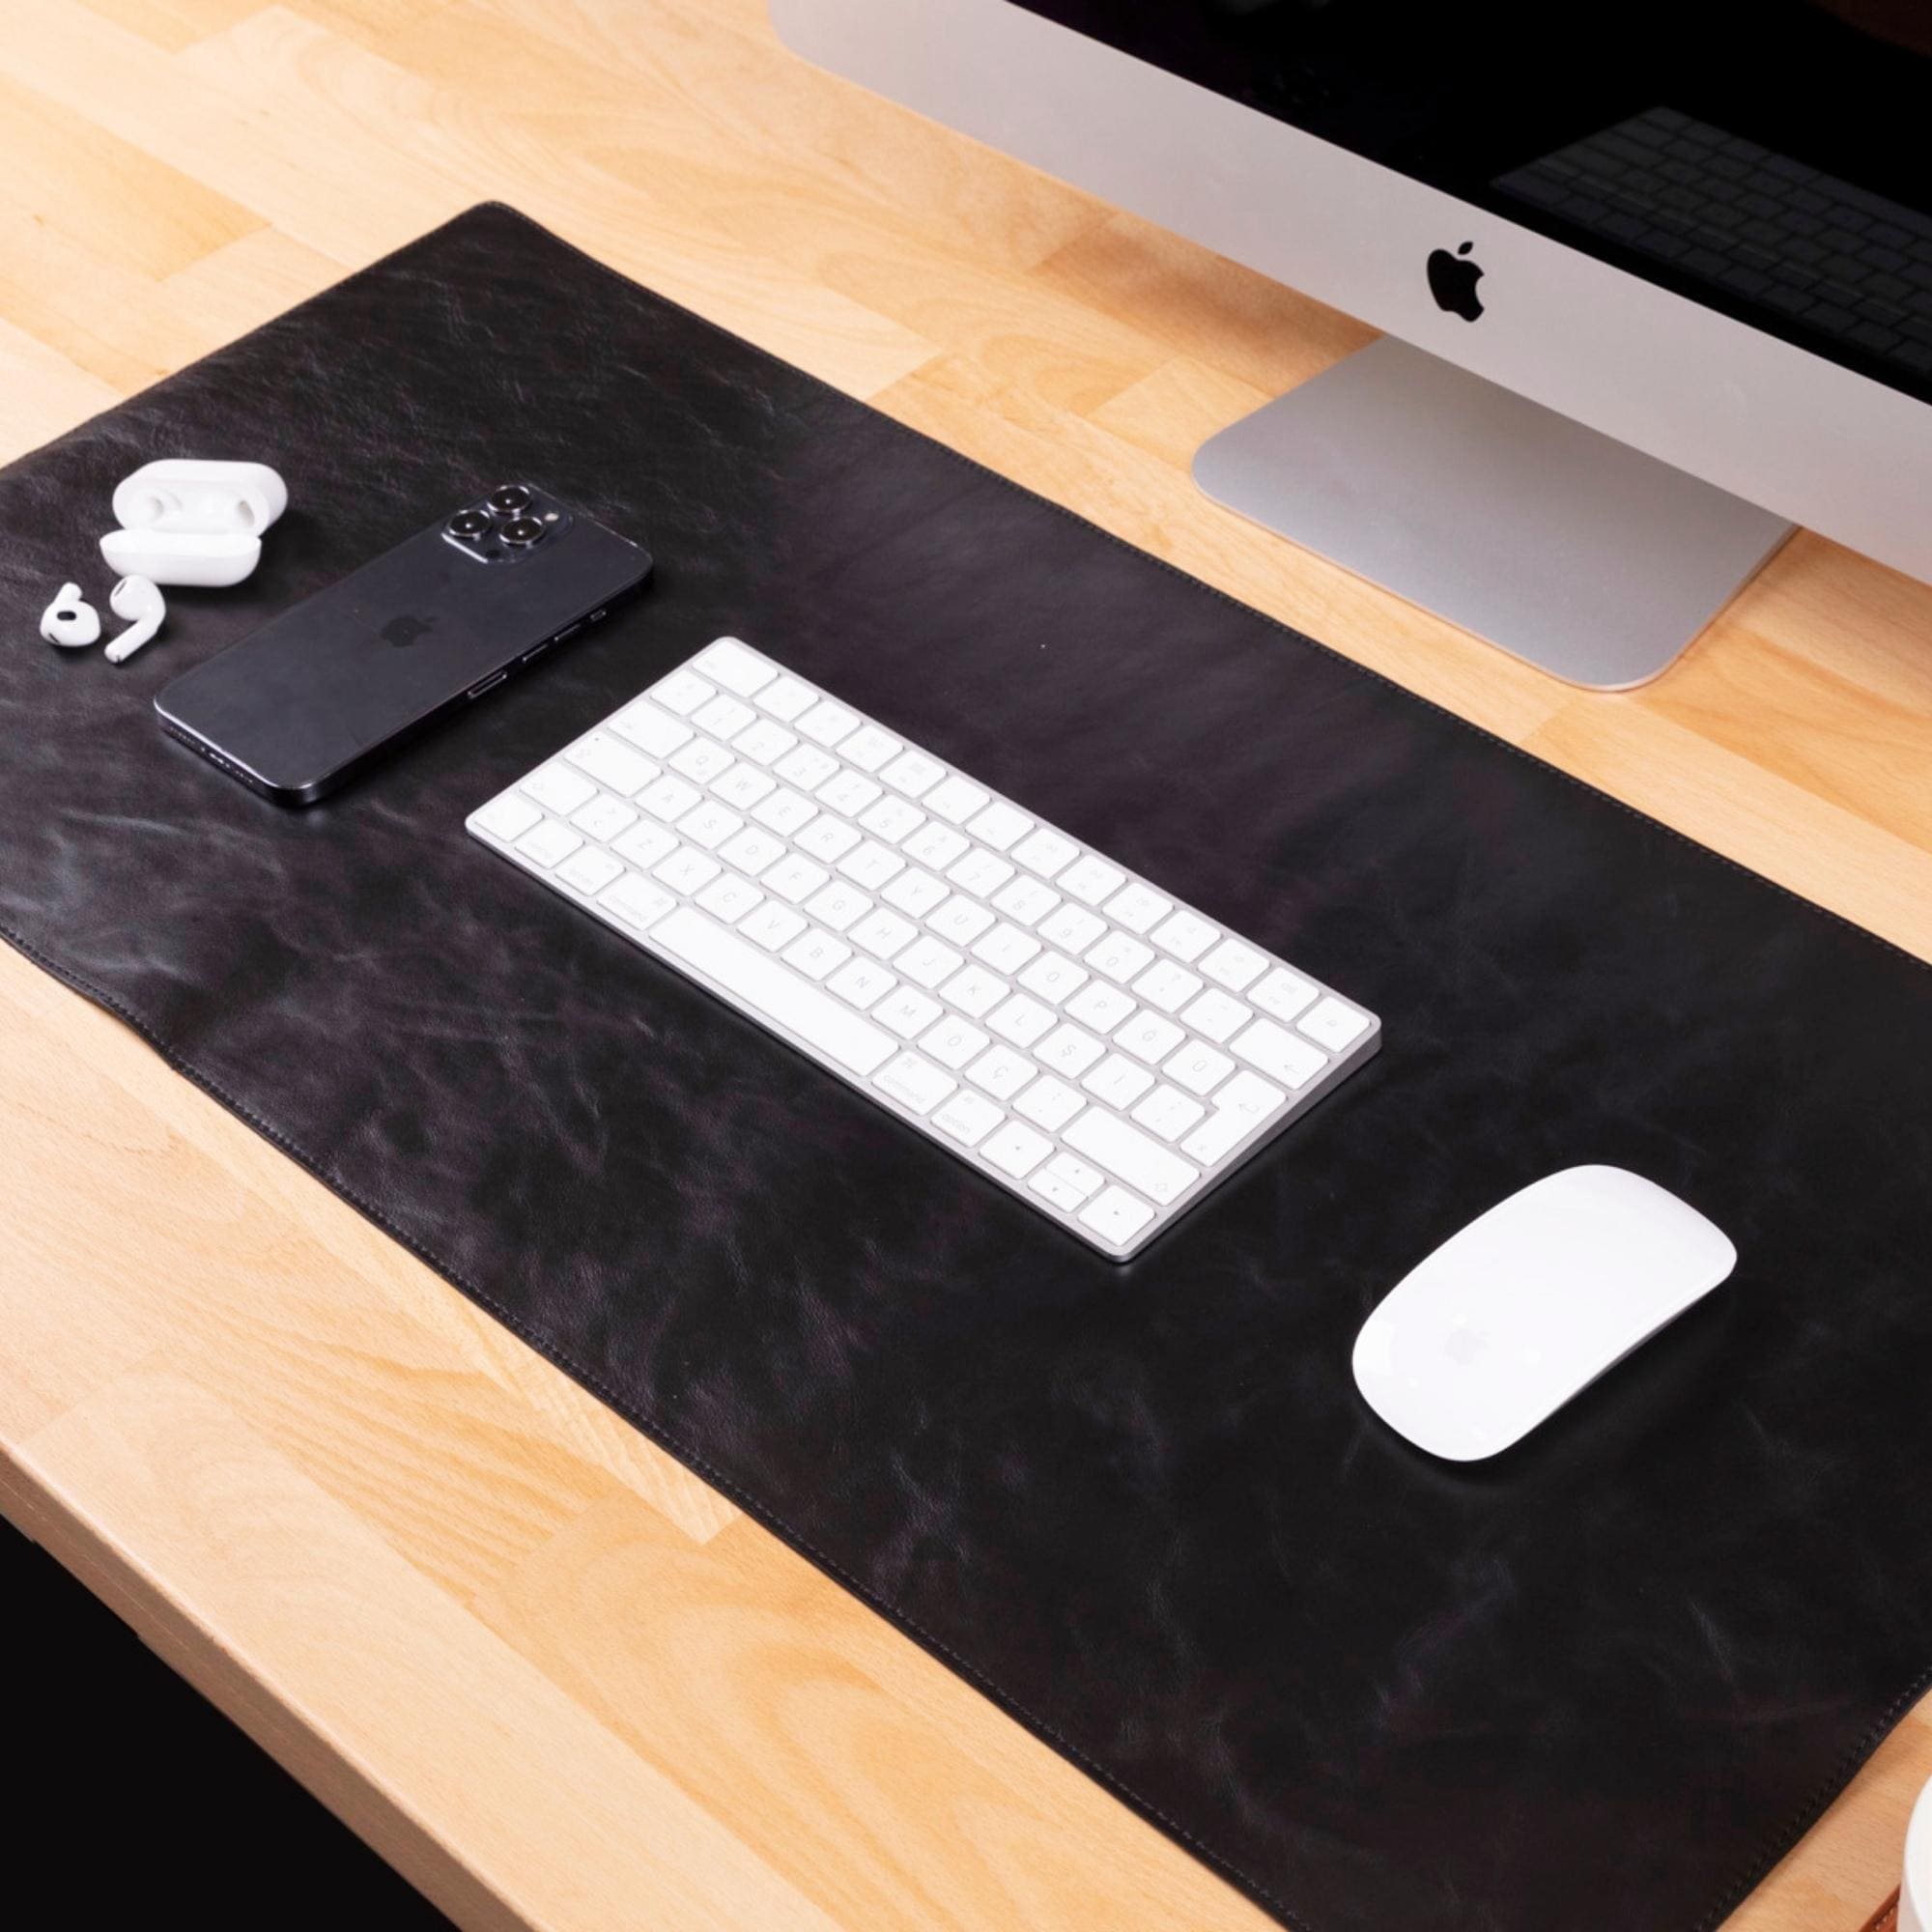 Rectangular Black PU Leather Desk Pad, Size: 90x40 Cm at Rs 699